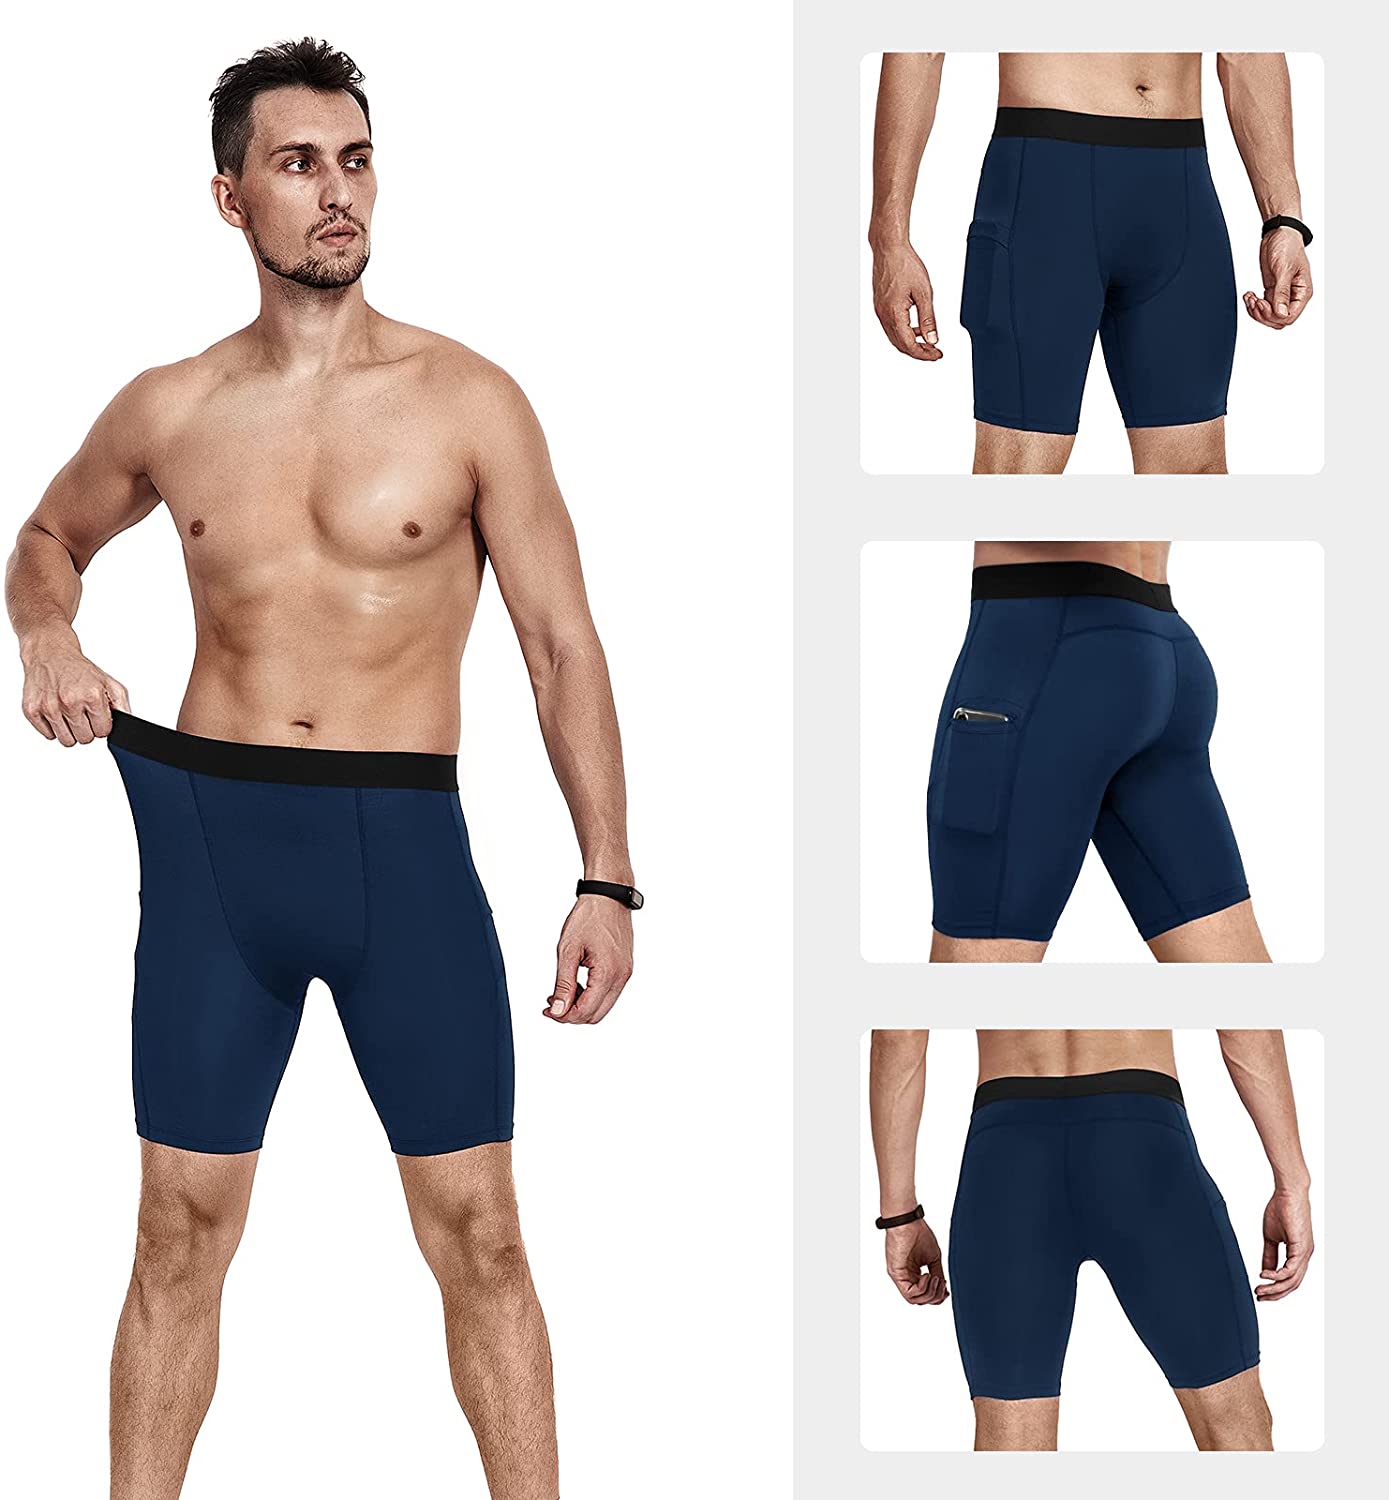 Mens Running Shorts. Gym Compression Shorts